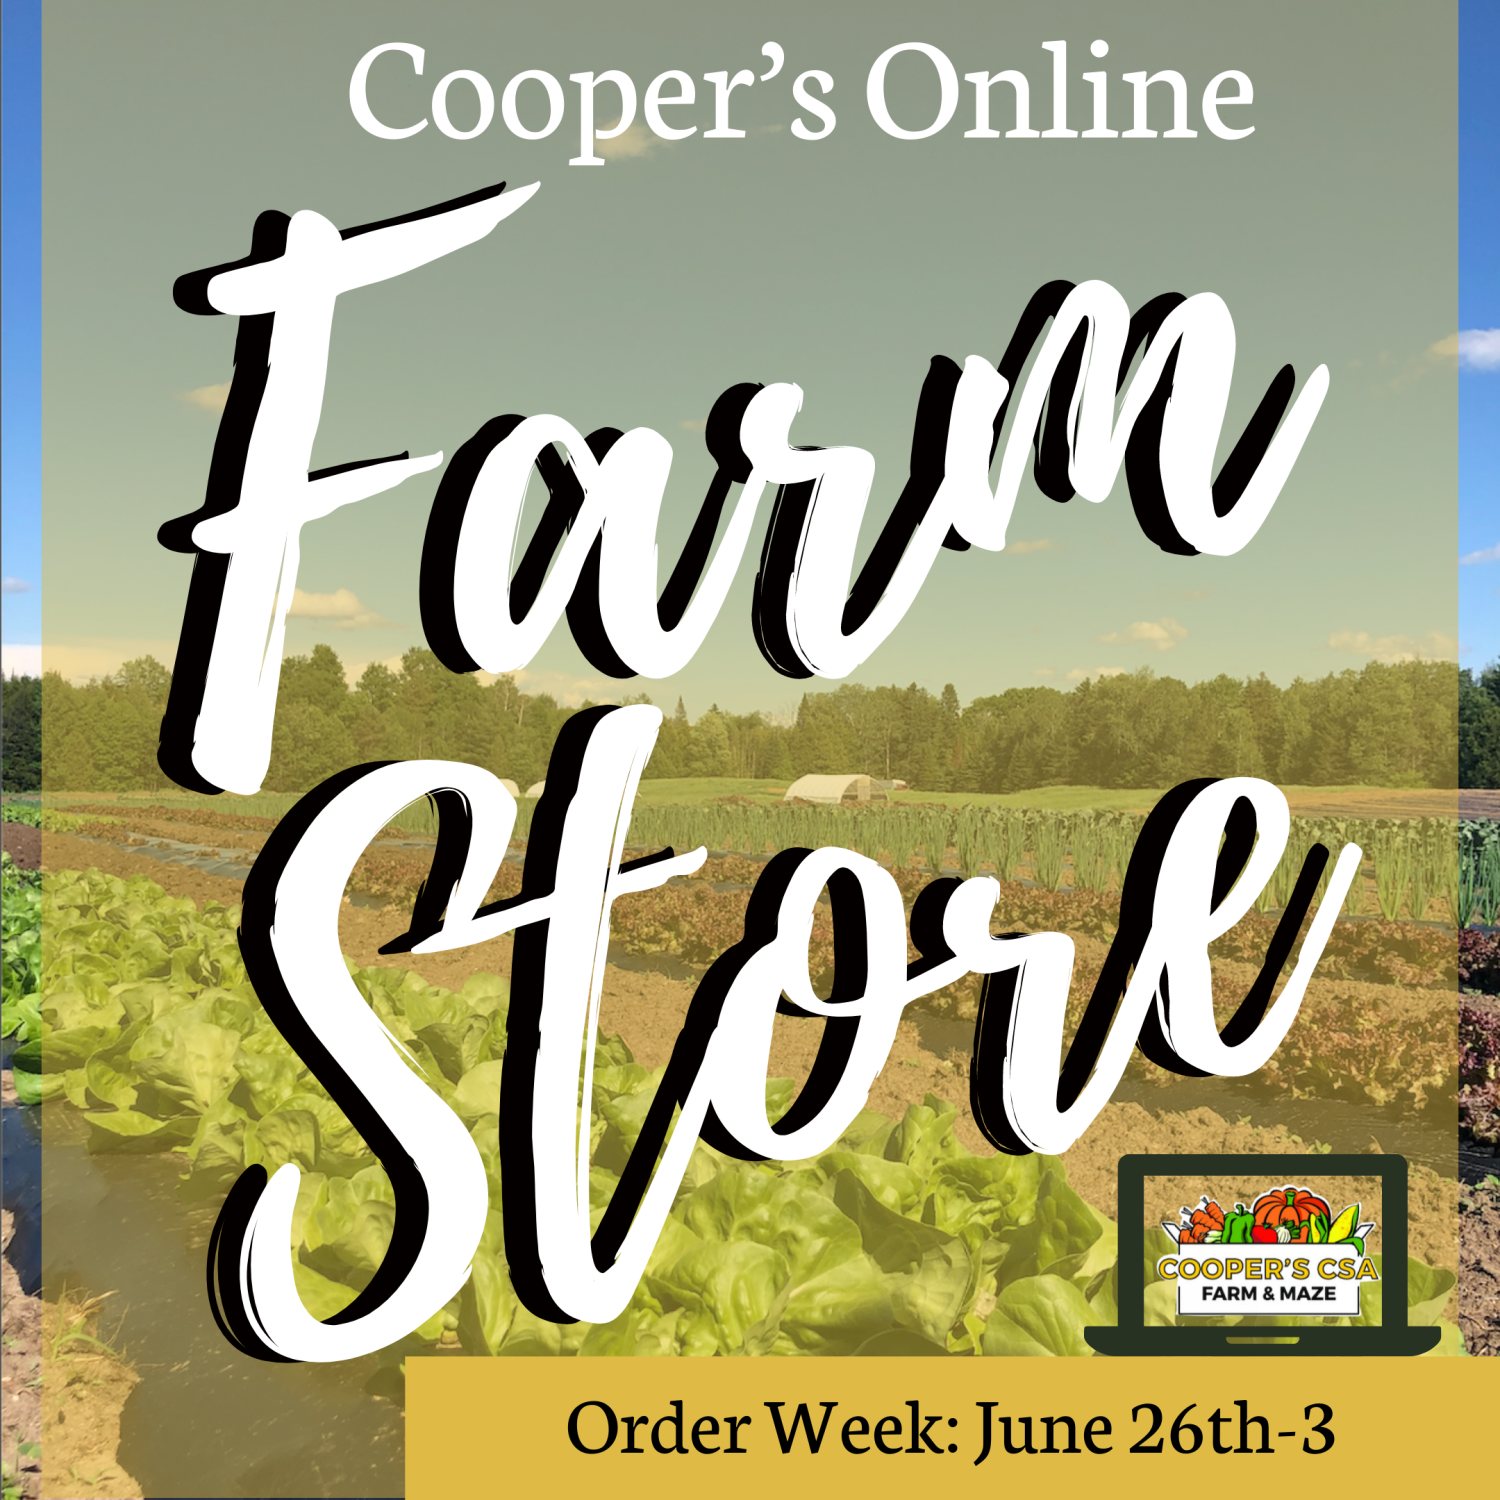 Next Happening: Coopers CSA Online FarmStore- Order week June 26th July 1st